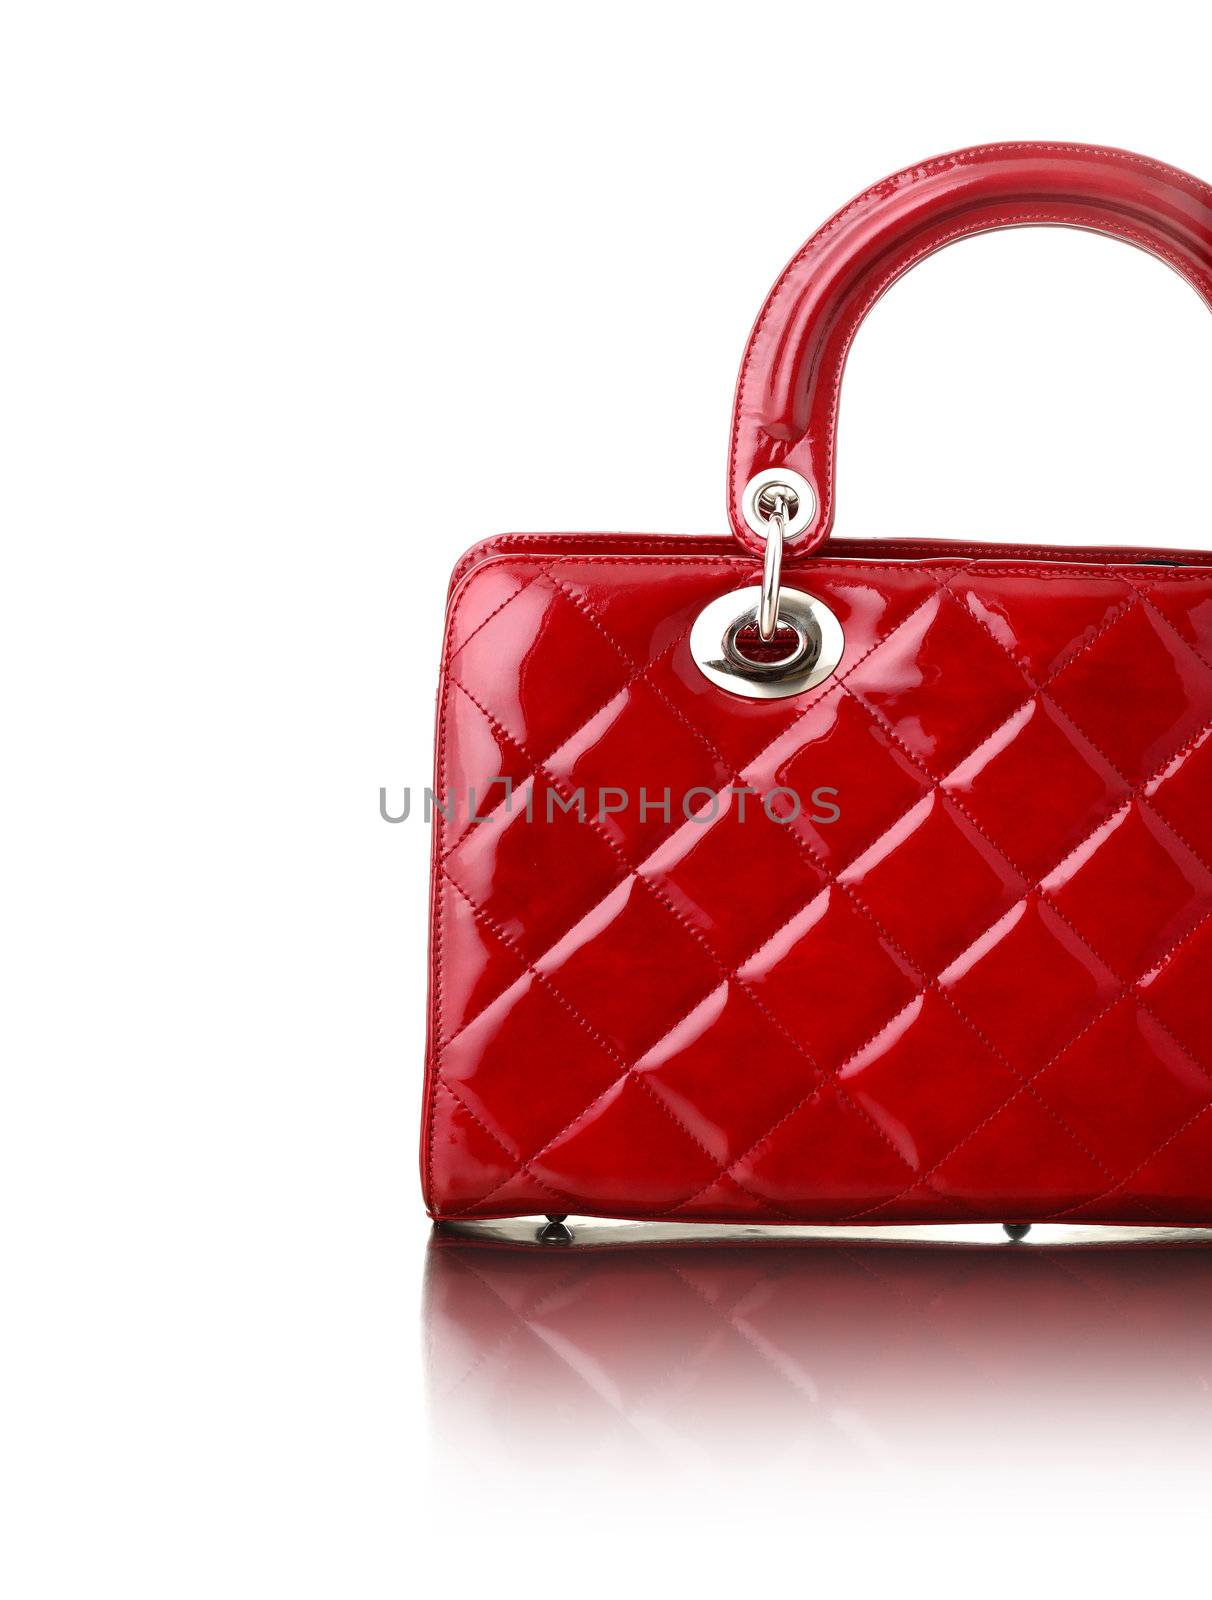 red ladies handbag, fashion photo by stokkete